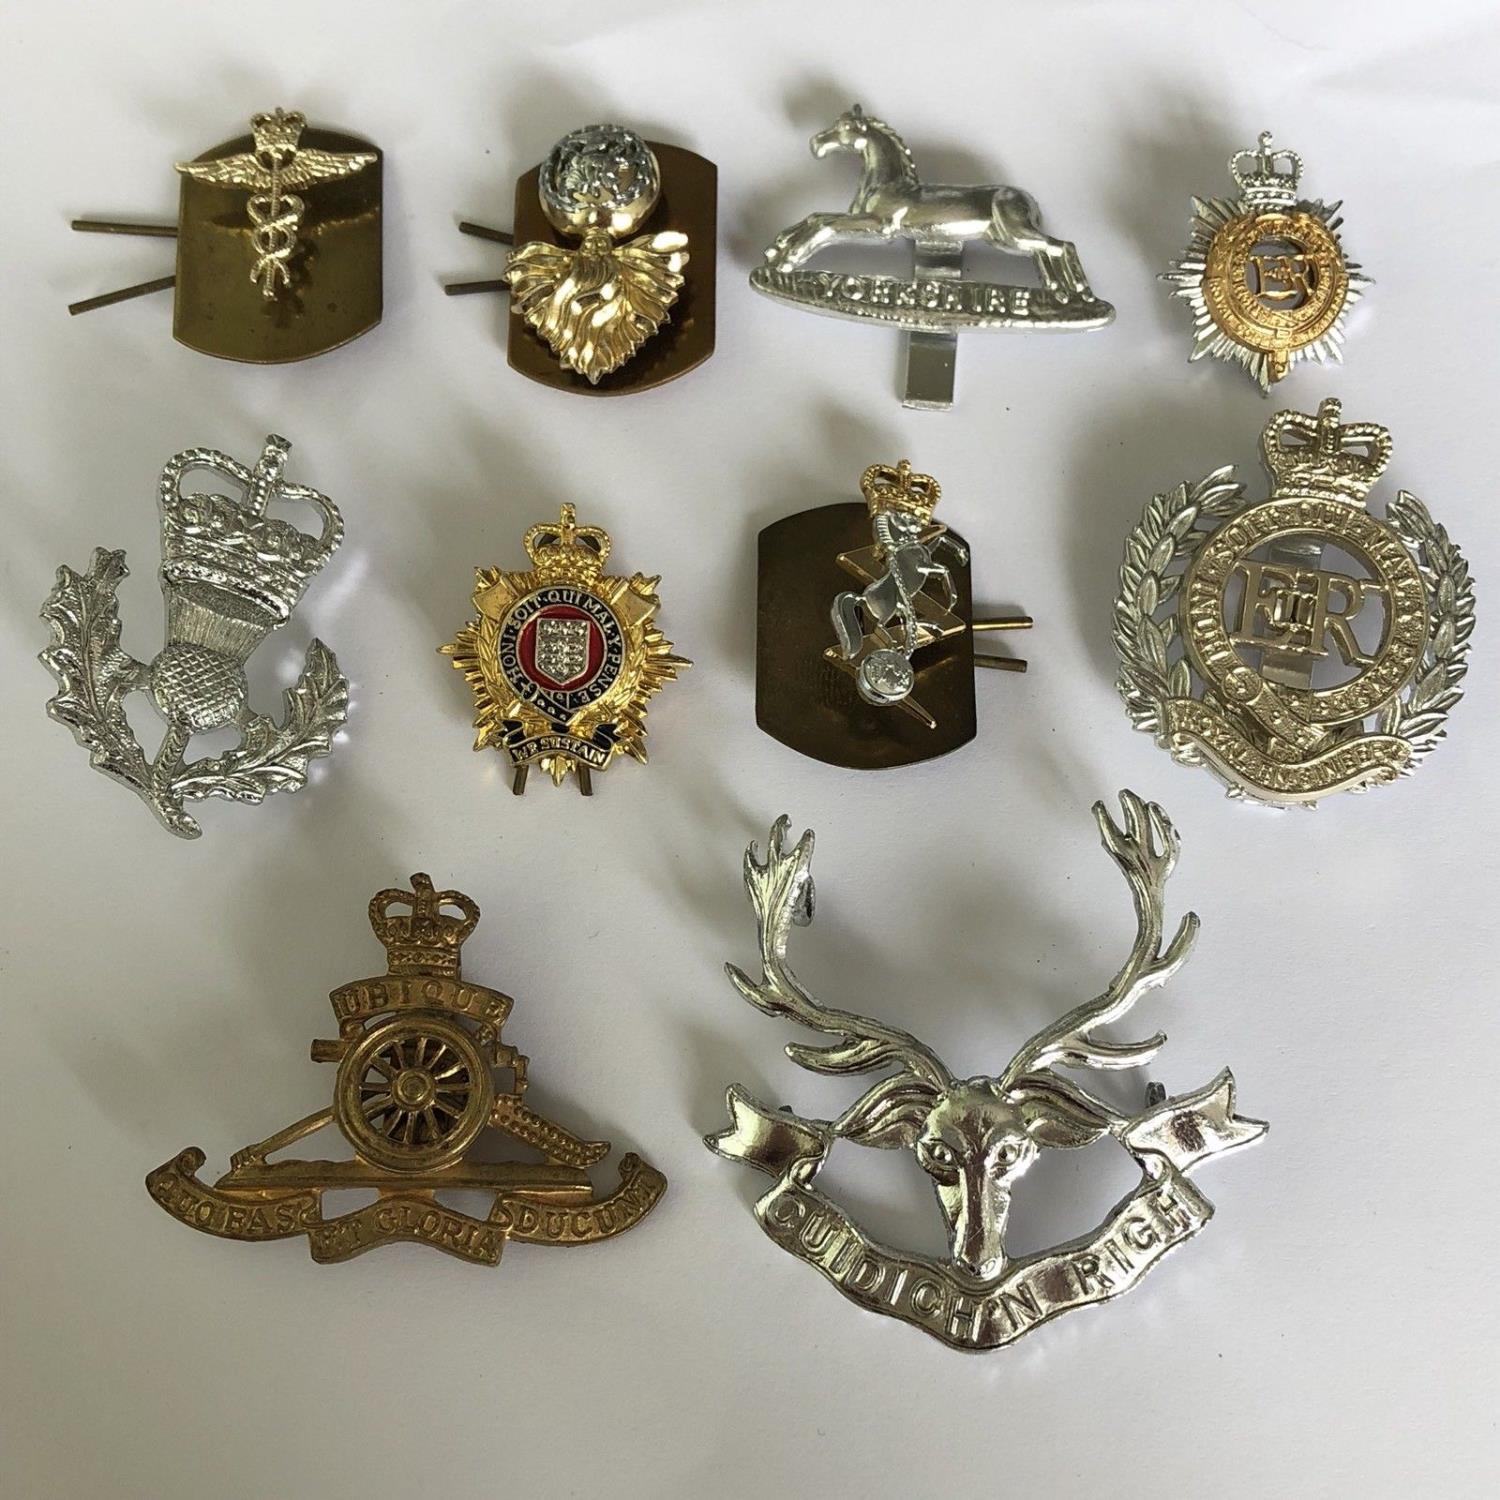 Group of 10 British militaryÊcap badges